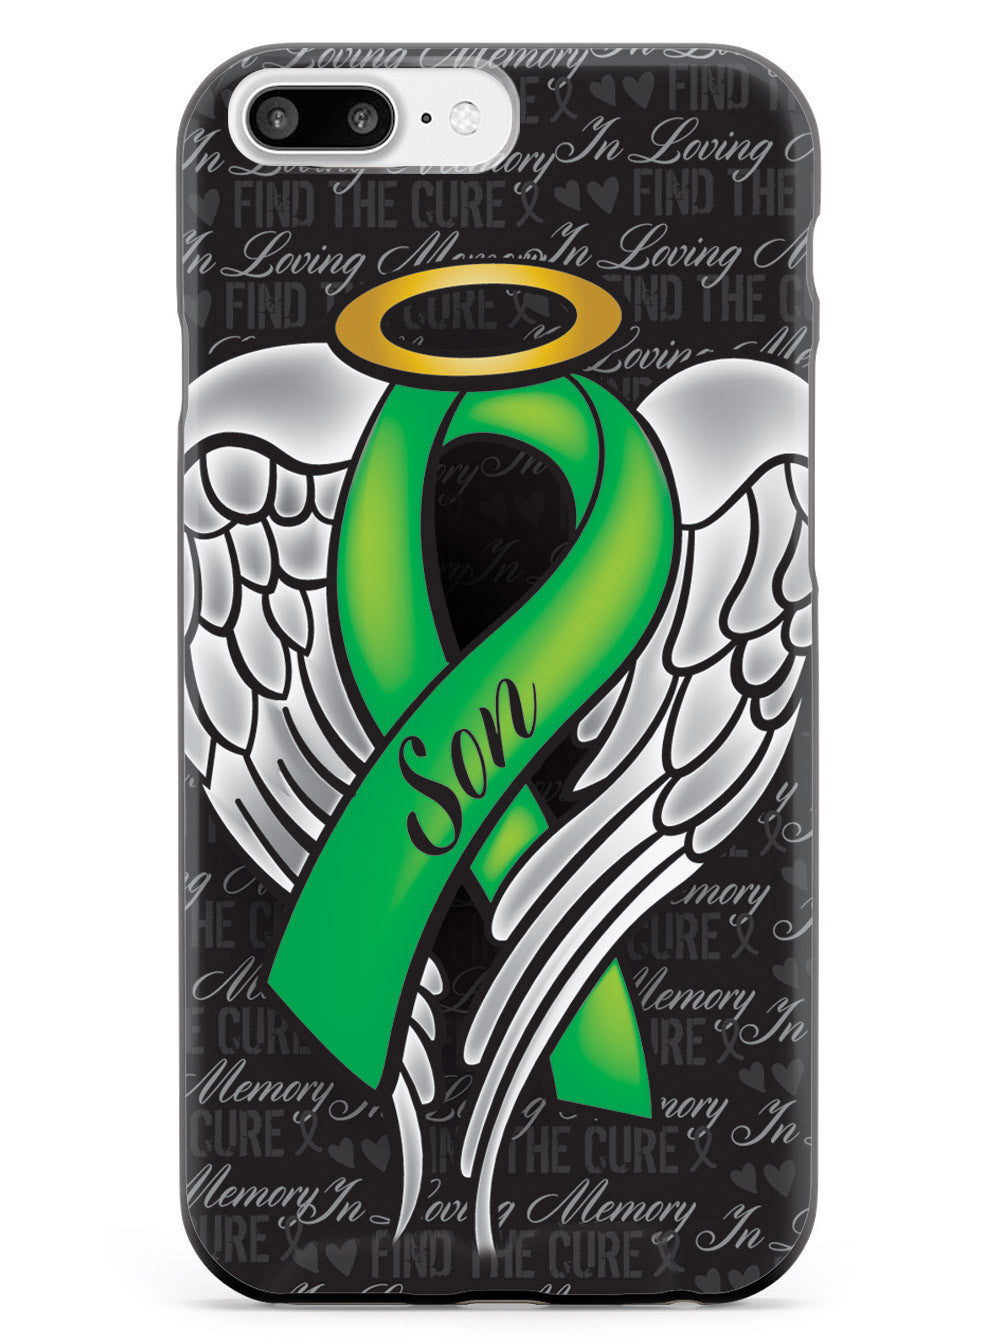 In Loving Memory of My Son - Green Ribbon Case